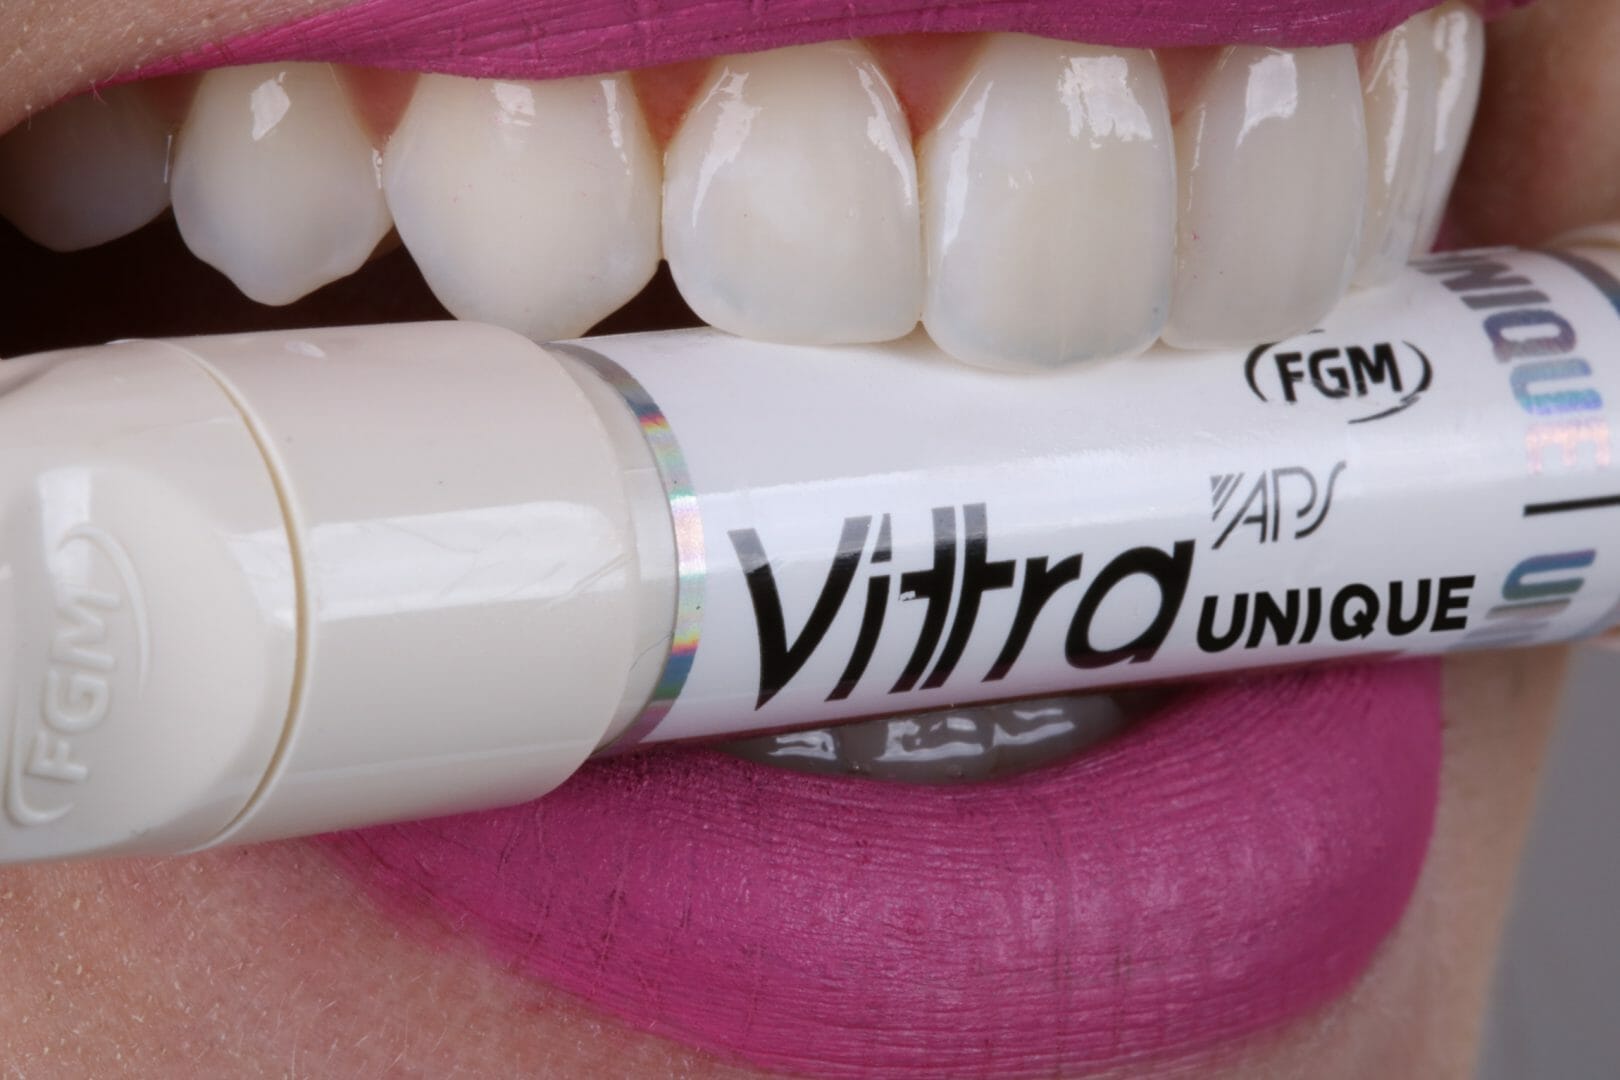 Replacement of composite in anterior tooth with Vittra APS Unique composite - FGMUS